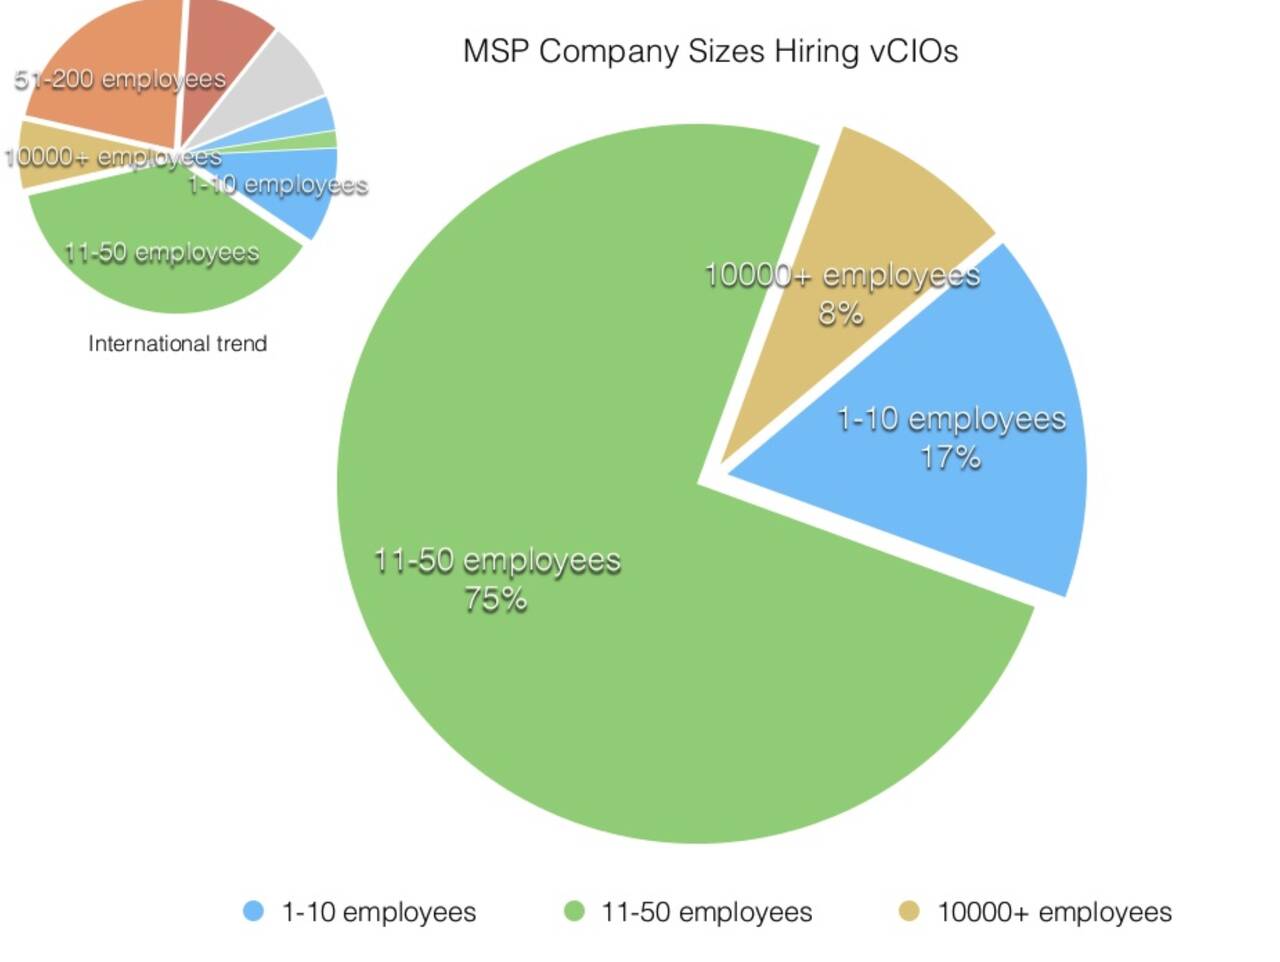 MSP company sizes hiring vCIOs in Australia